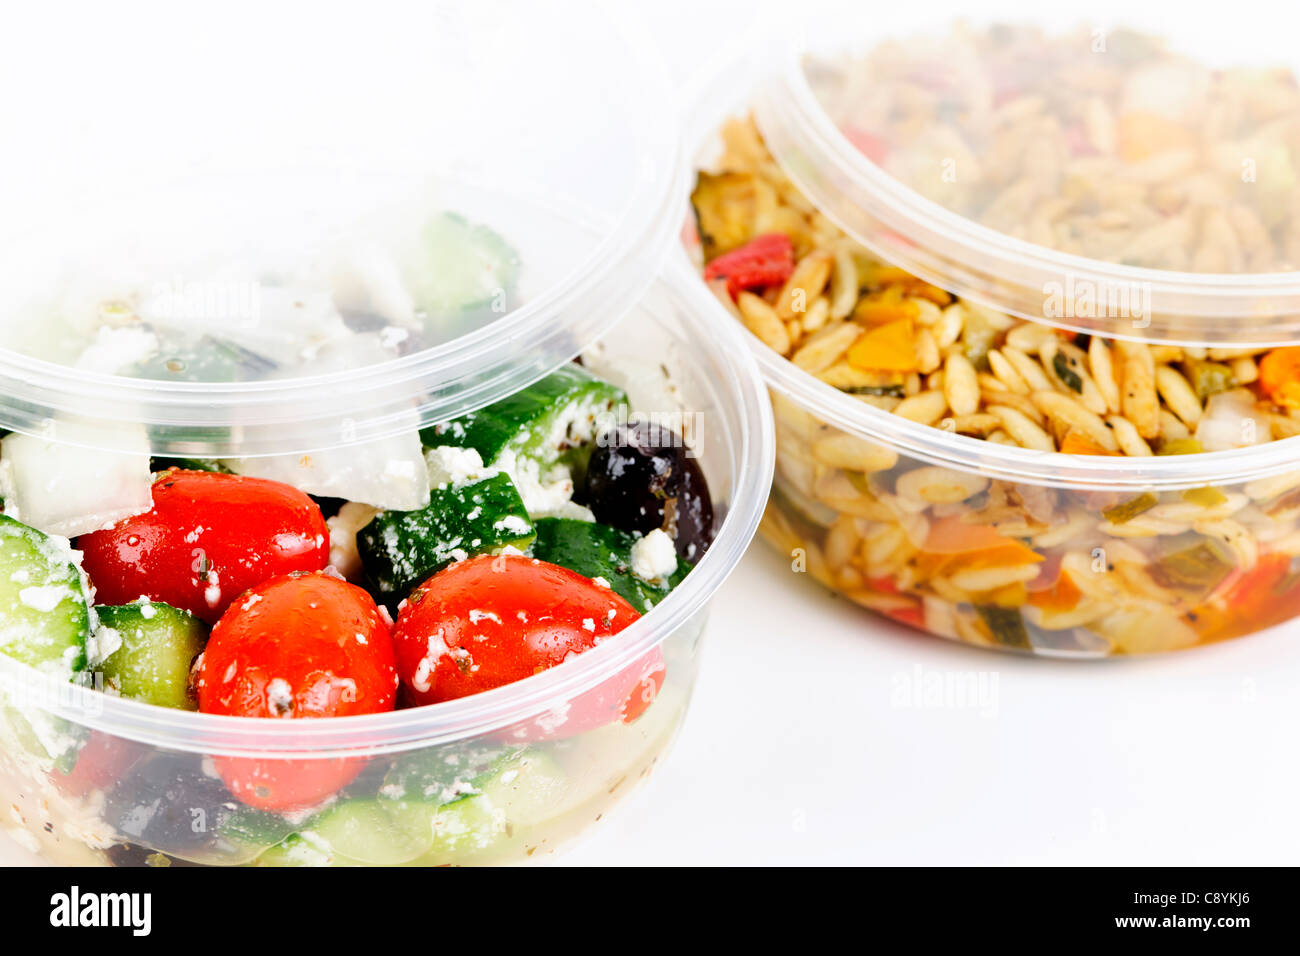 https://c8.alamy.com/comp/C8YKJ6/two-servings-of-prepared-salad-in-plastic-takeaway-containers-C8YKJ6.jpg